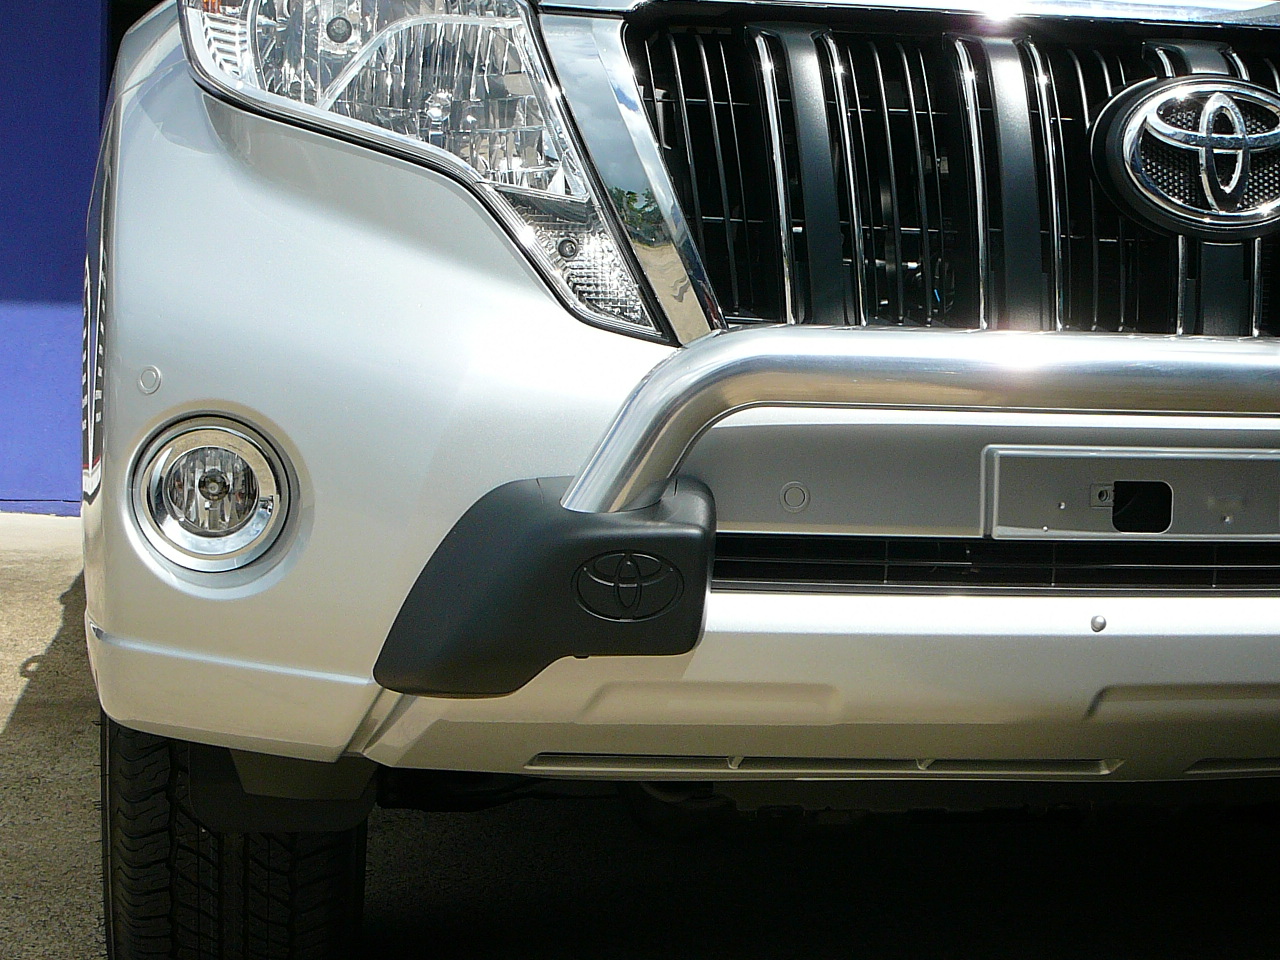 Toyota Prado 150 series with nudge bar, Front Parking Sensor Installation